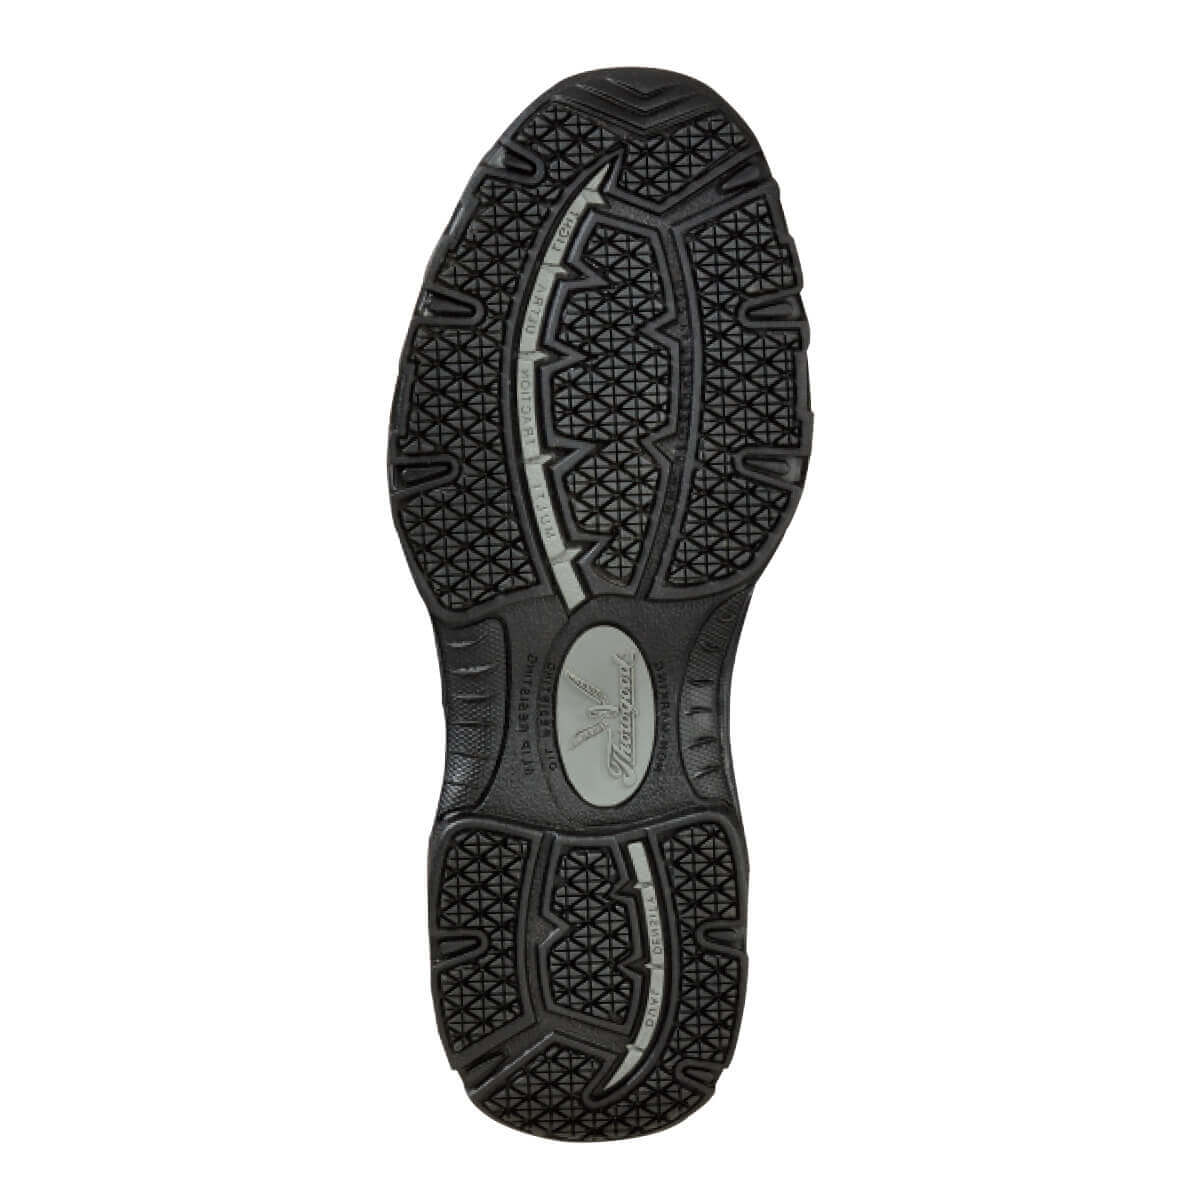 black polishable non slip shoes